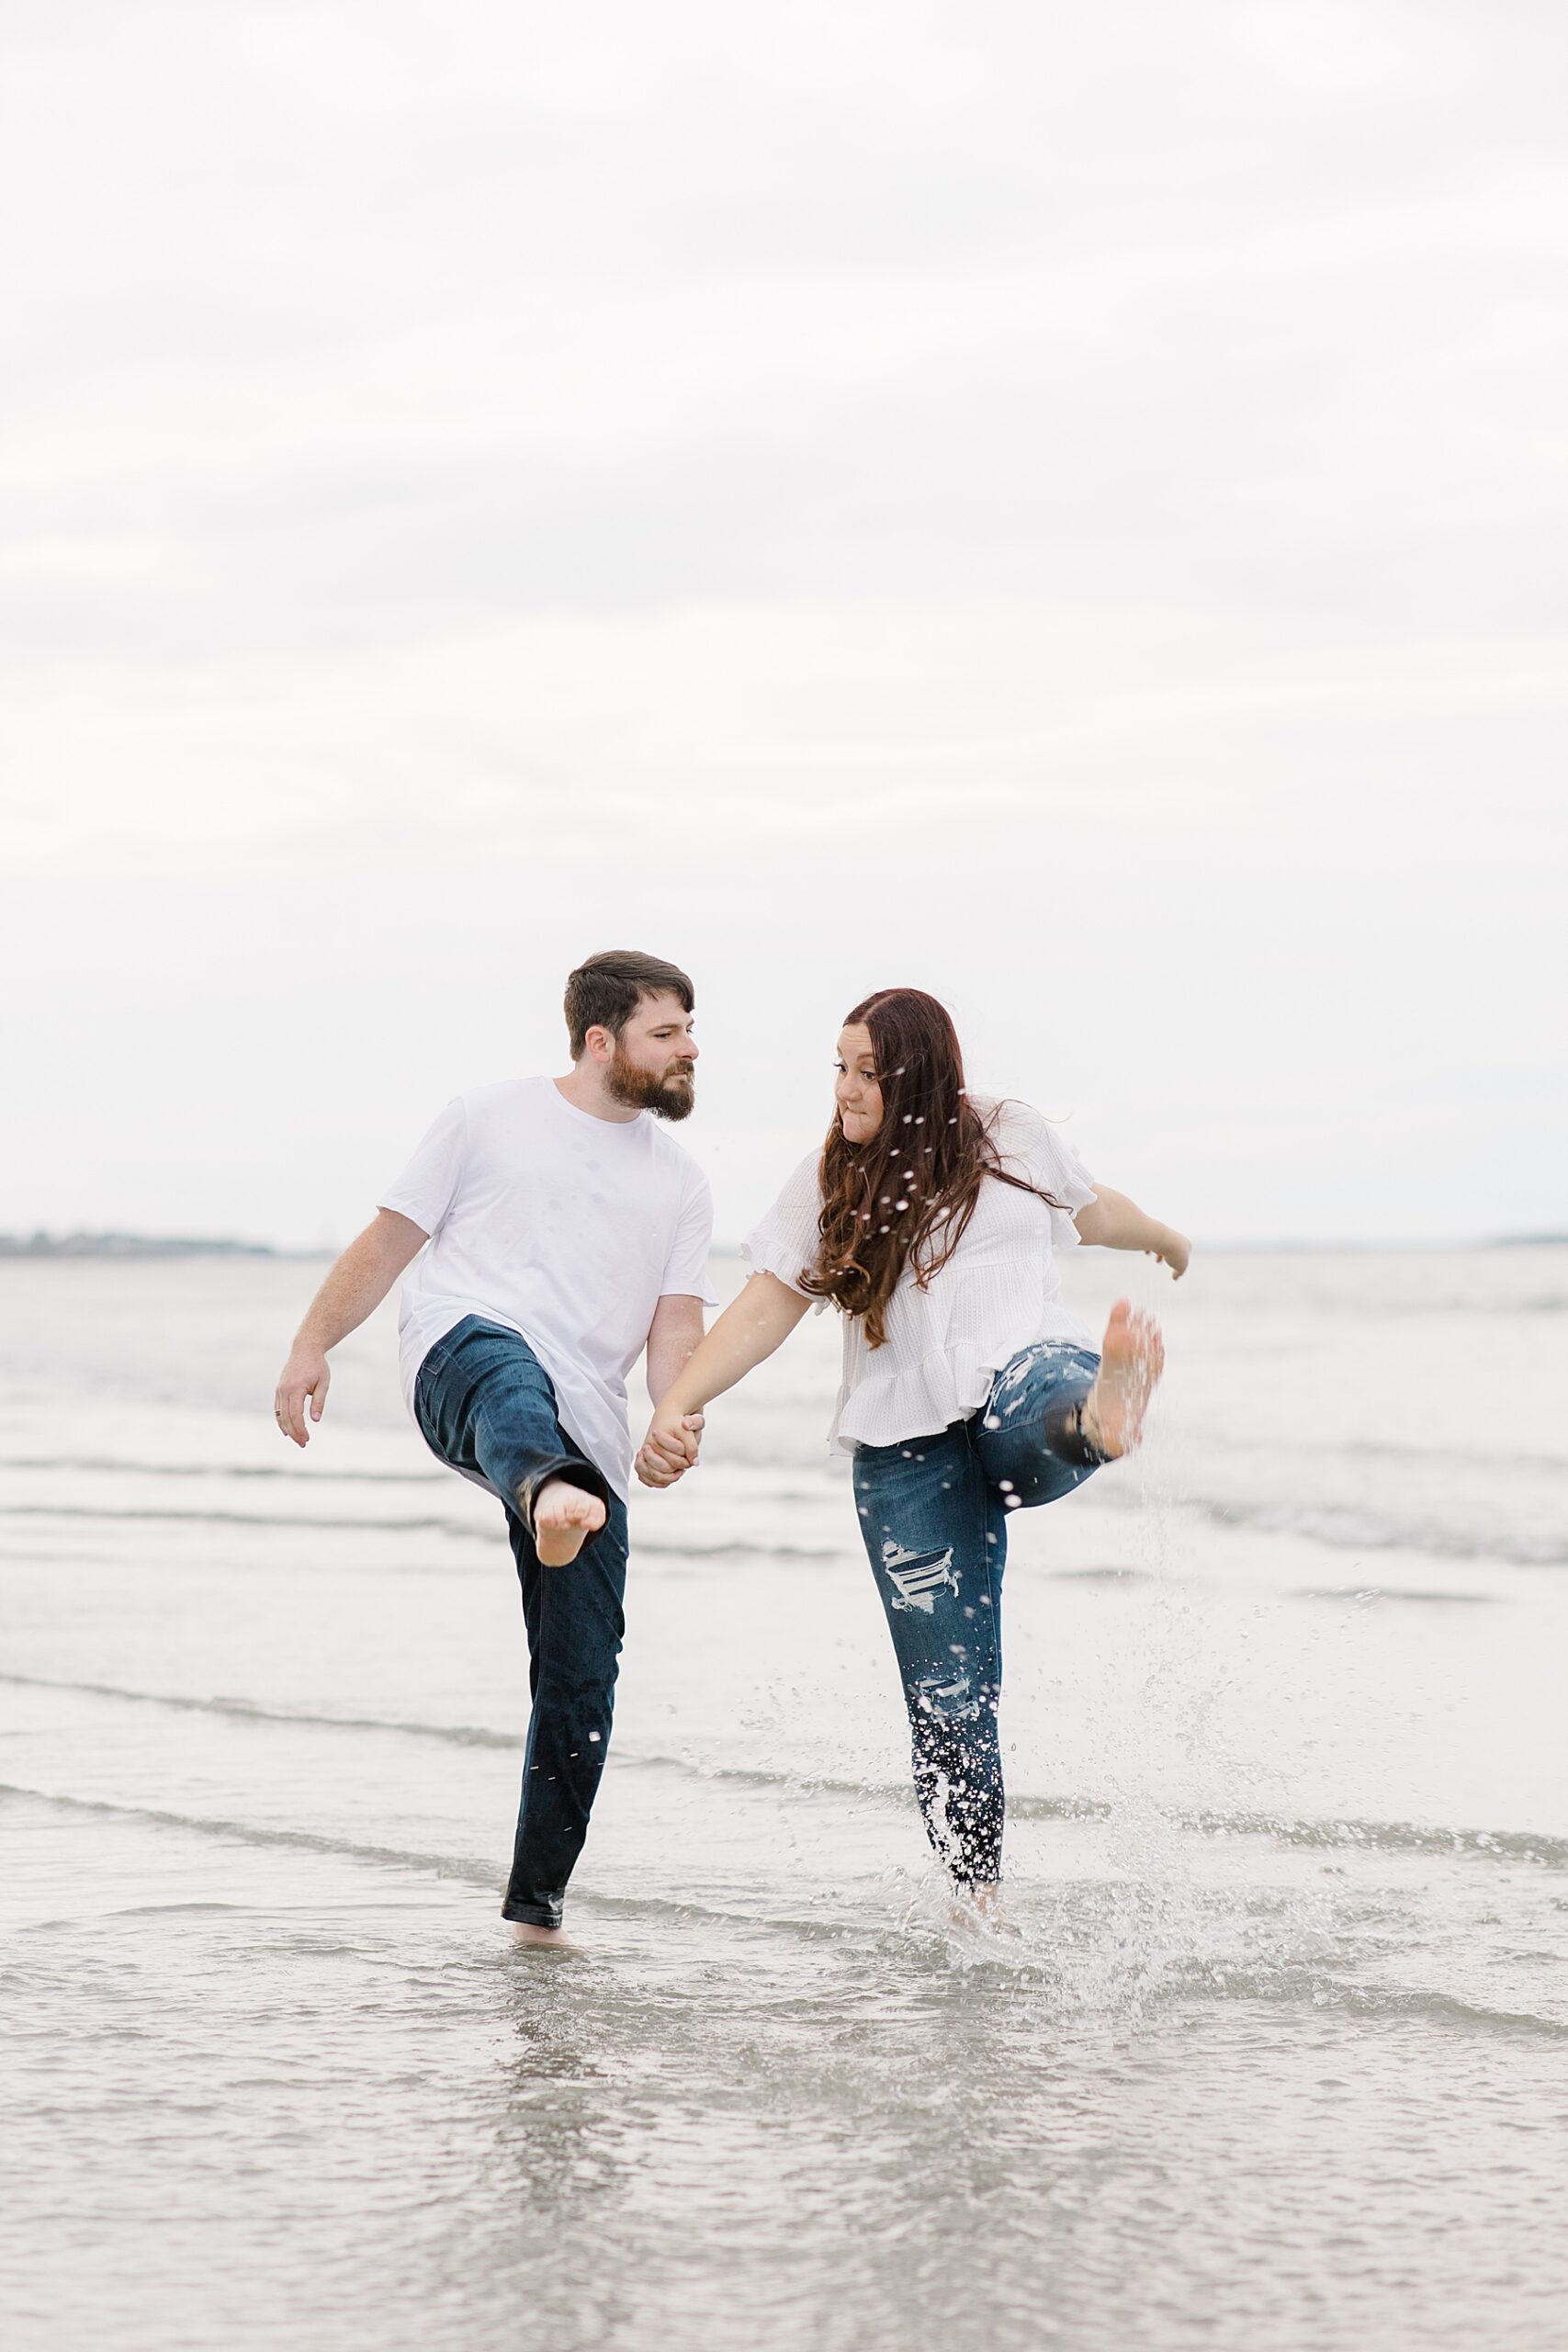 engaged couple kick up the water during Romantic Nantasket Beach Engagement